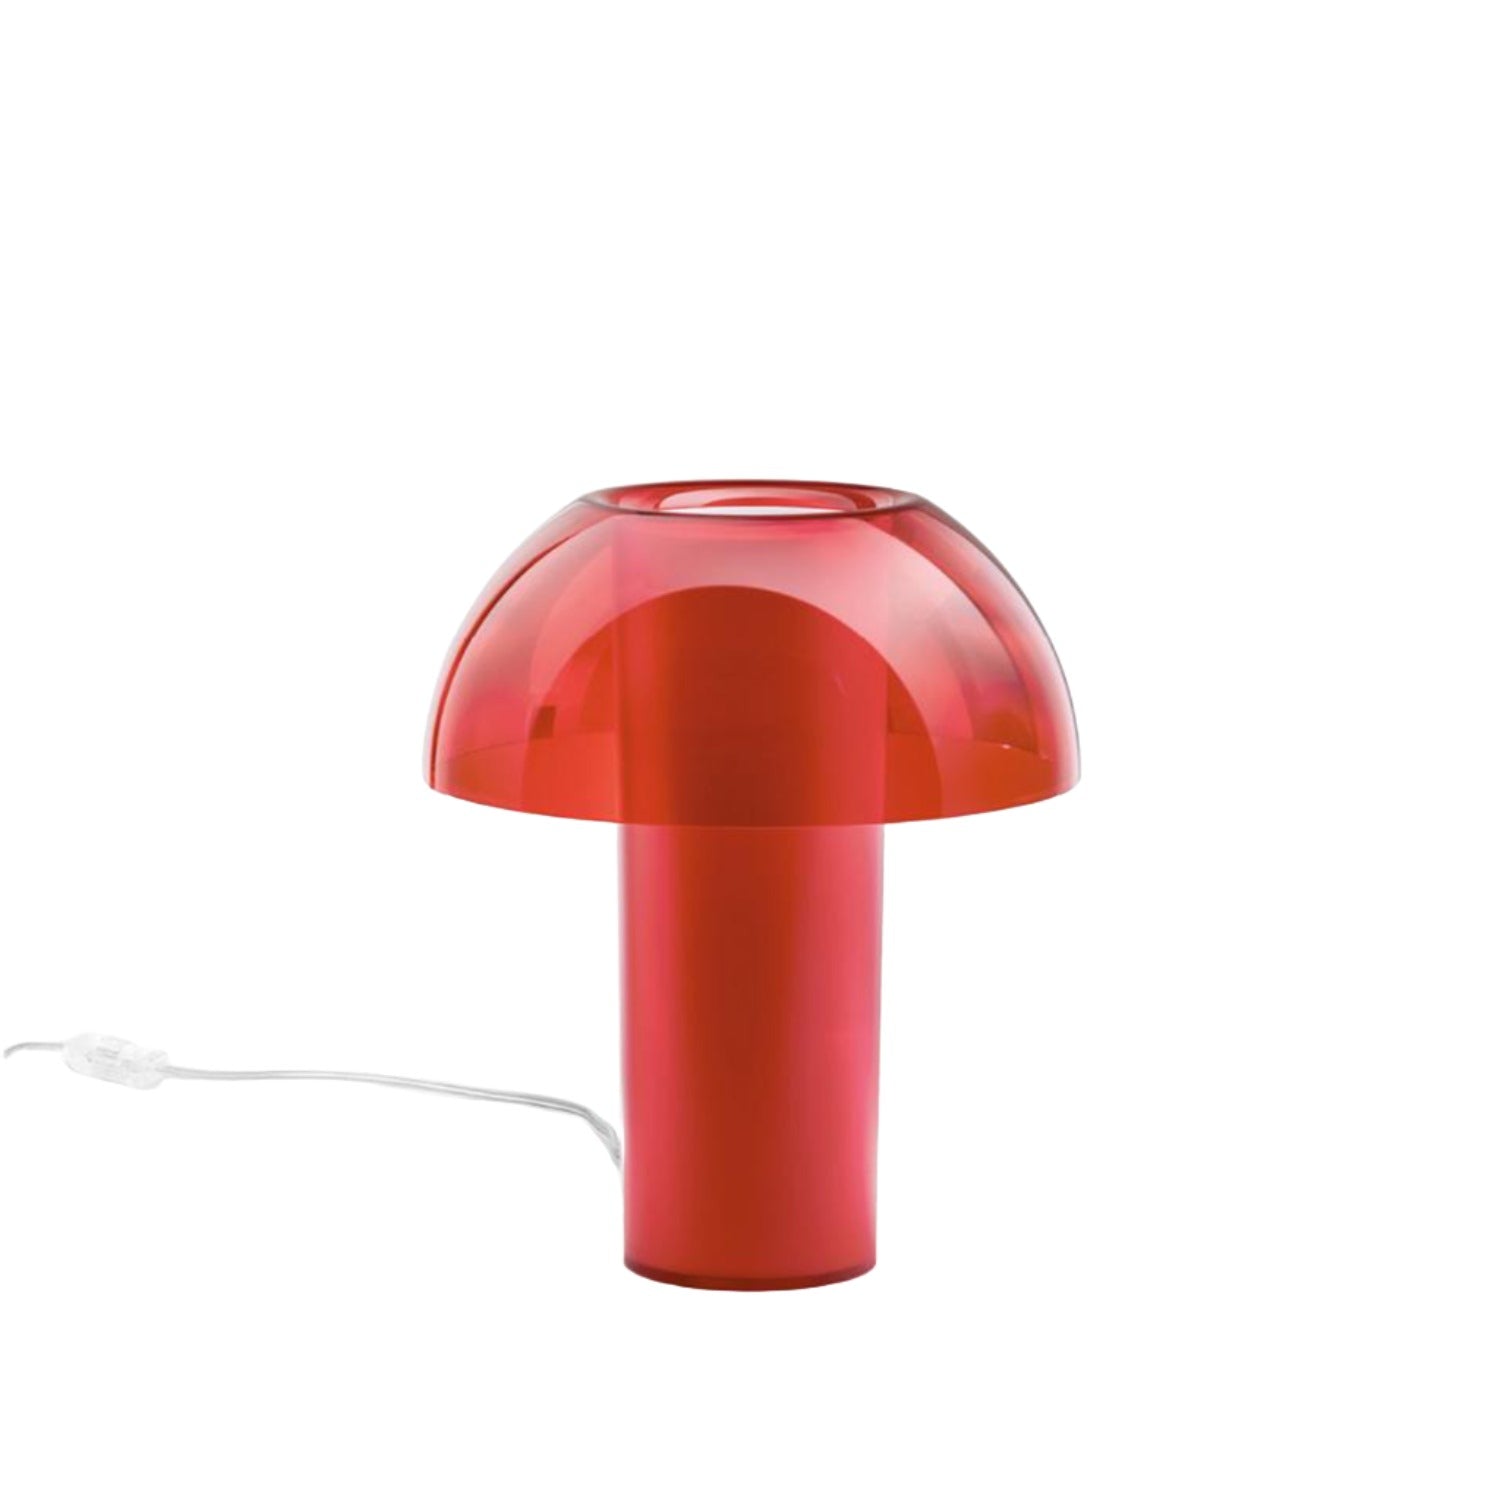 Pedrali Colette L003 TA table lamp in red